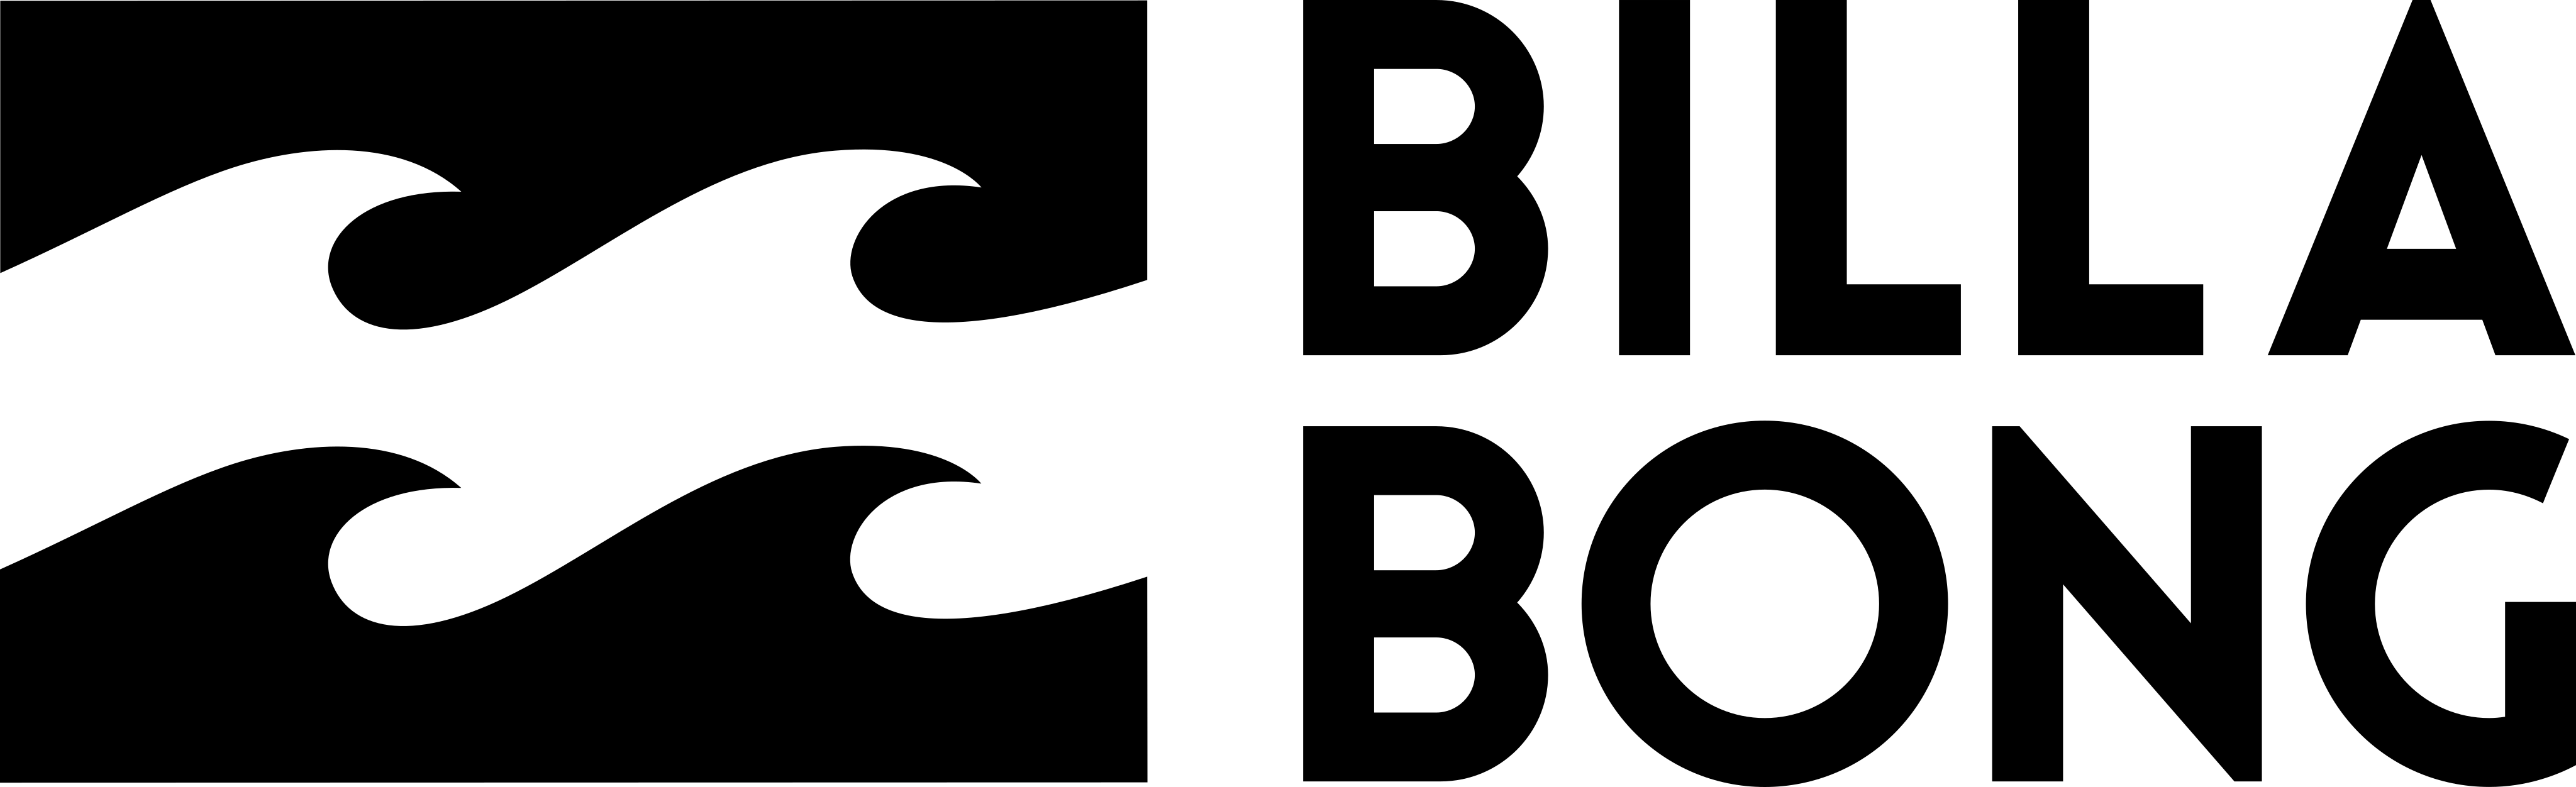 billabong logo - Billabong Logo